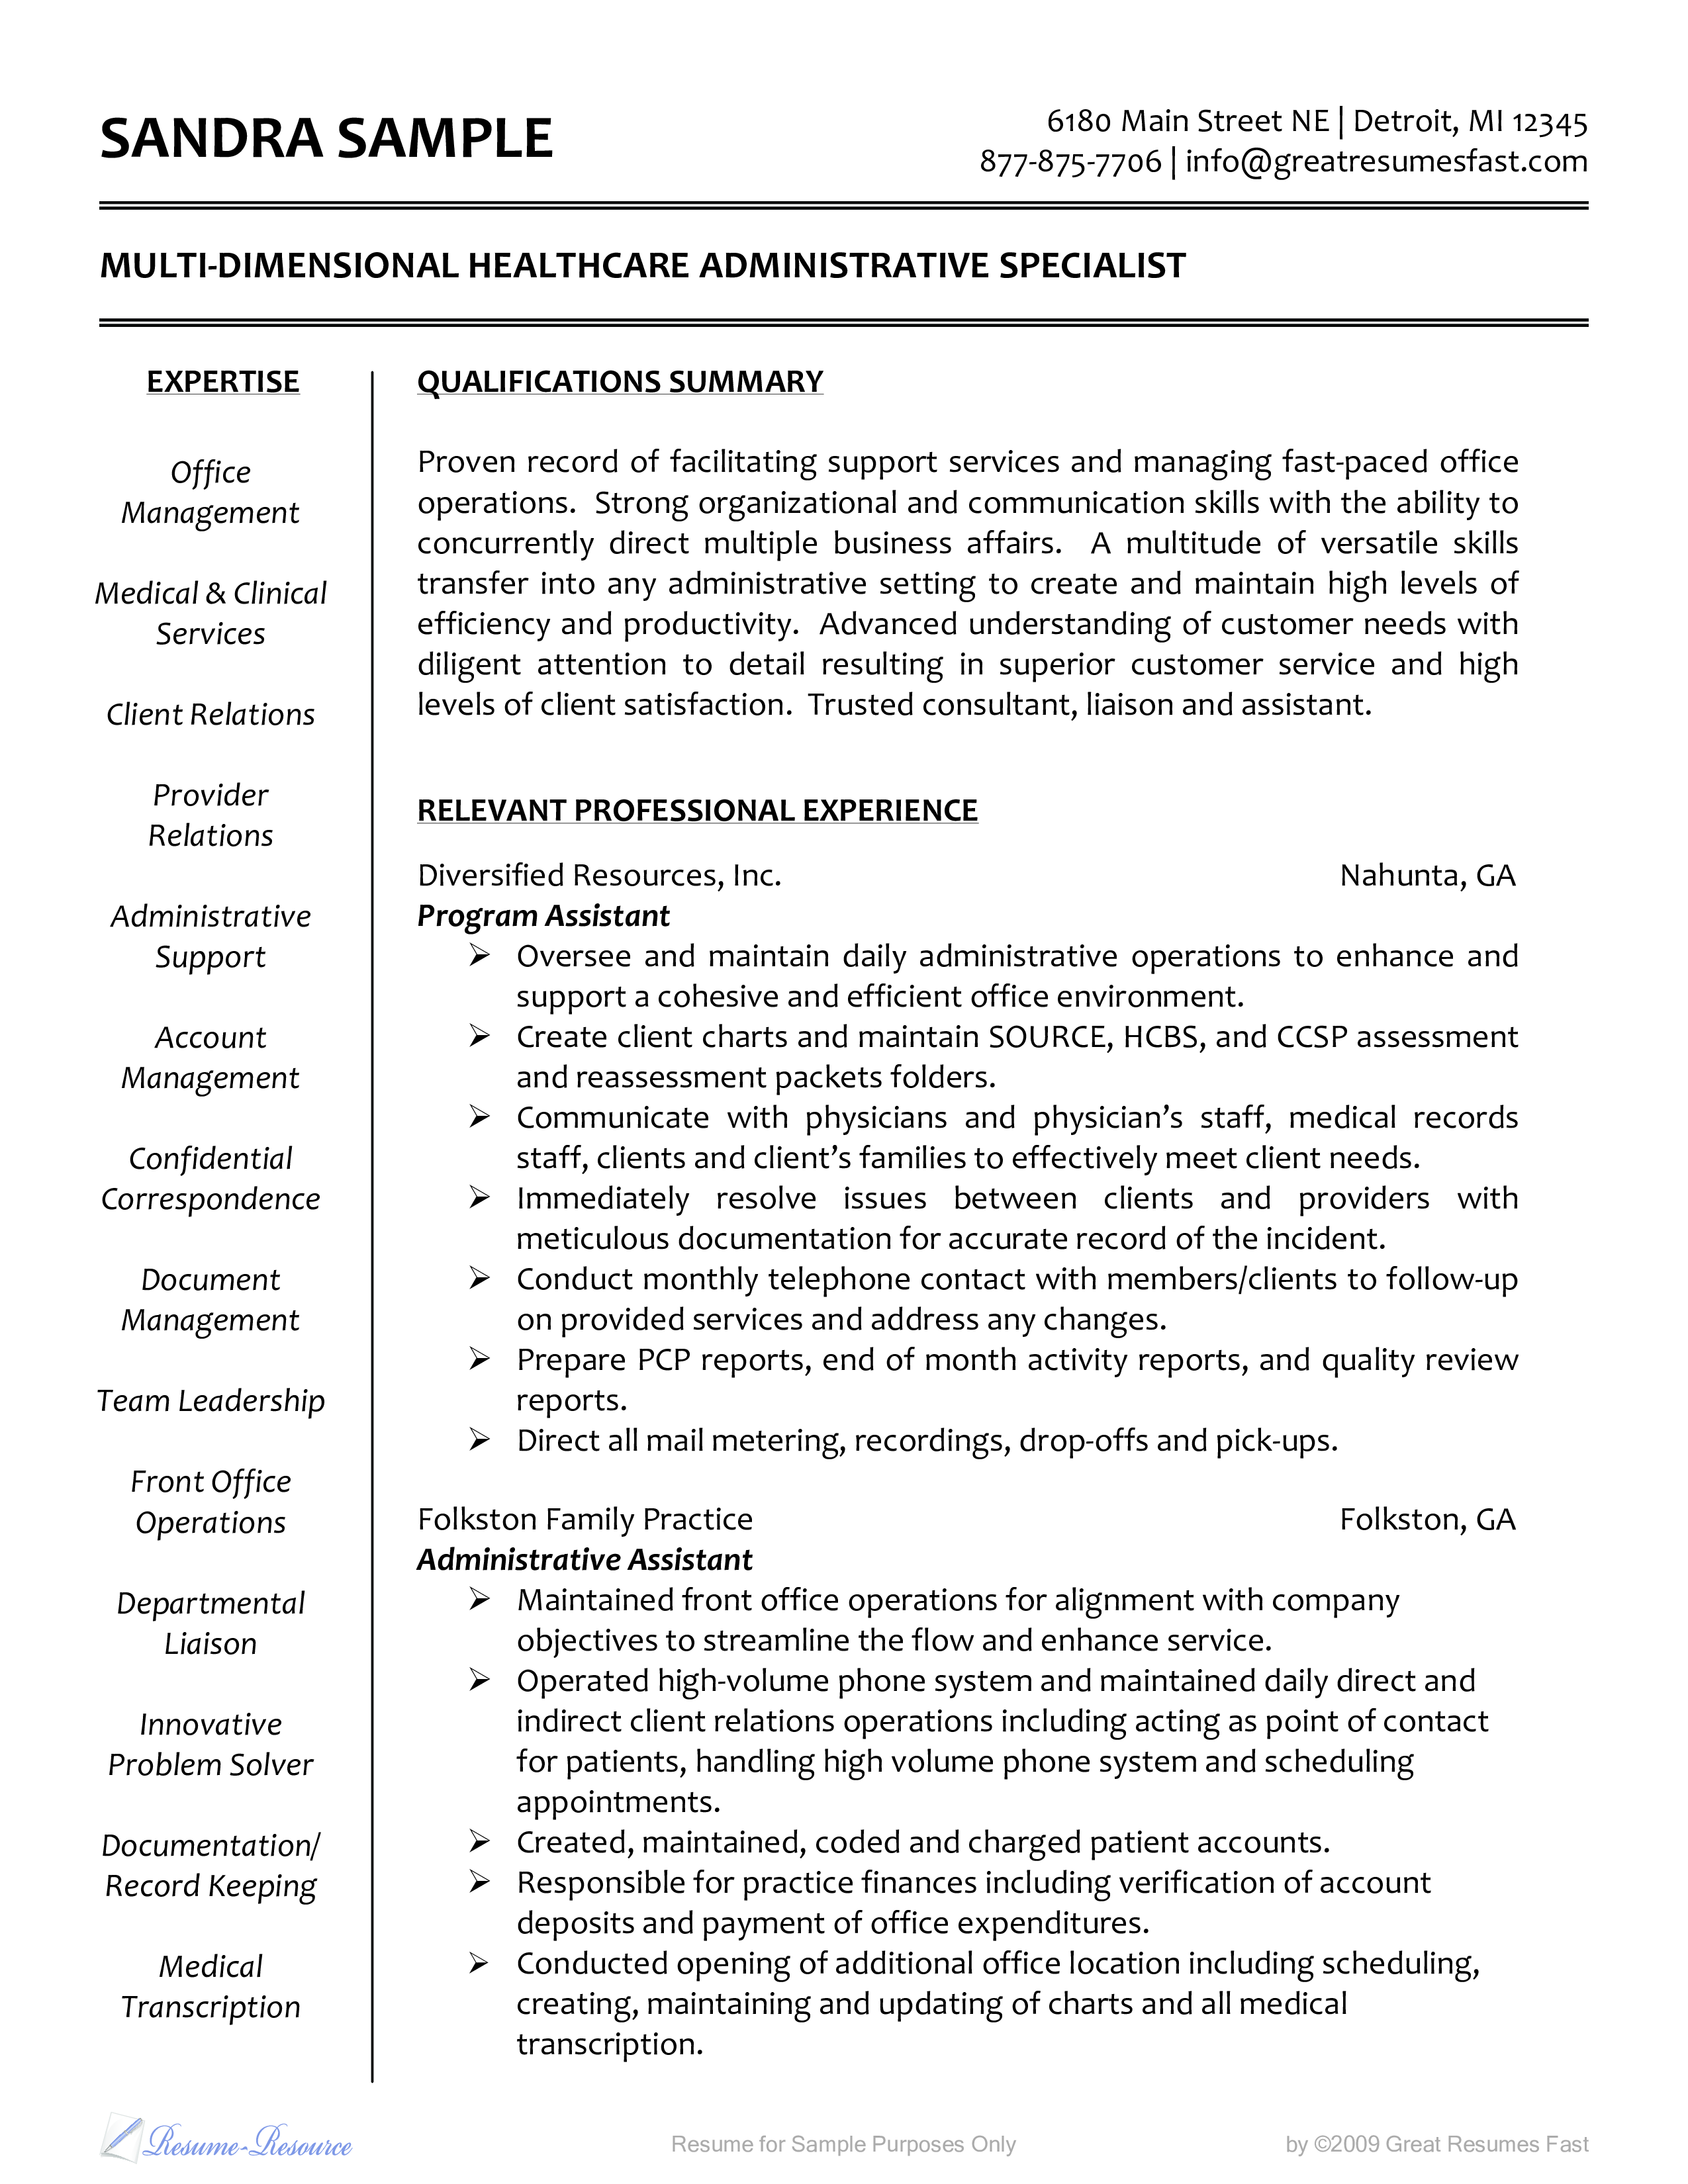 Healthcare Administrative Resume Sample main image